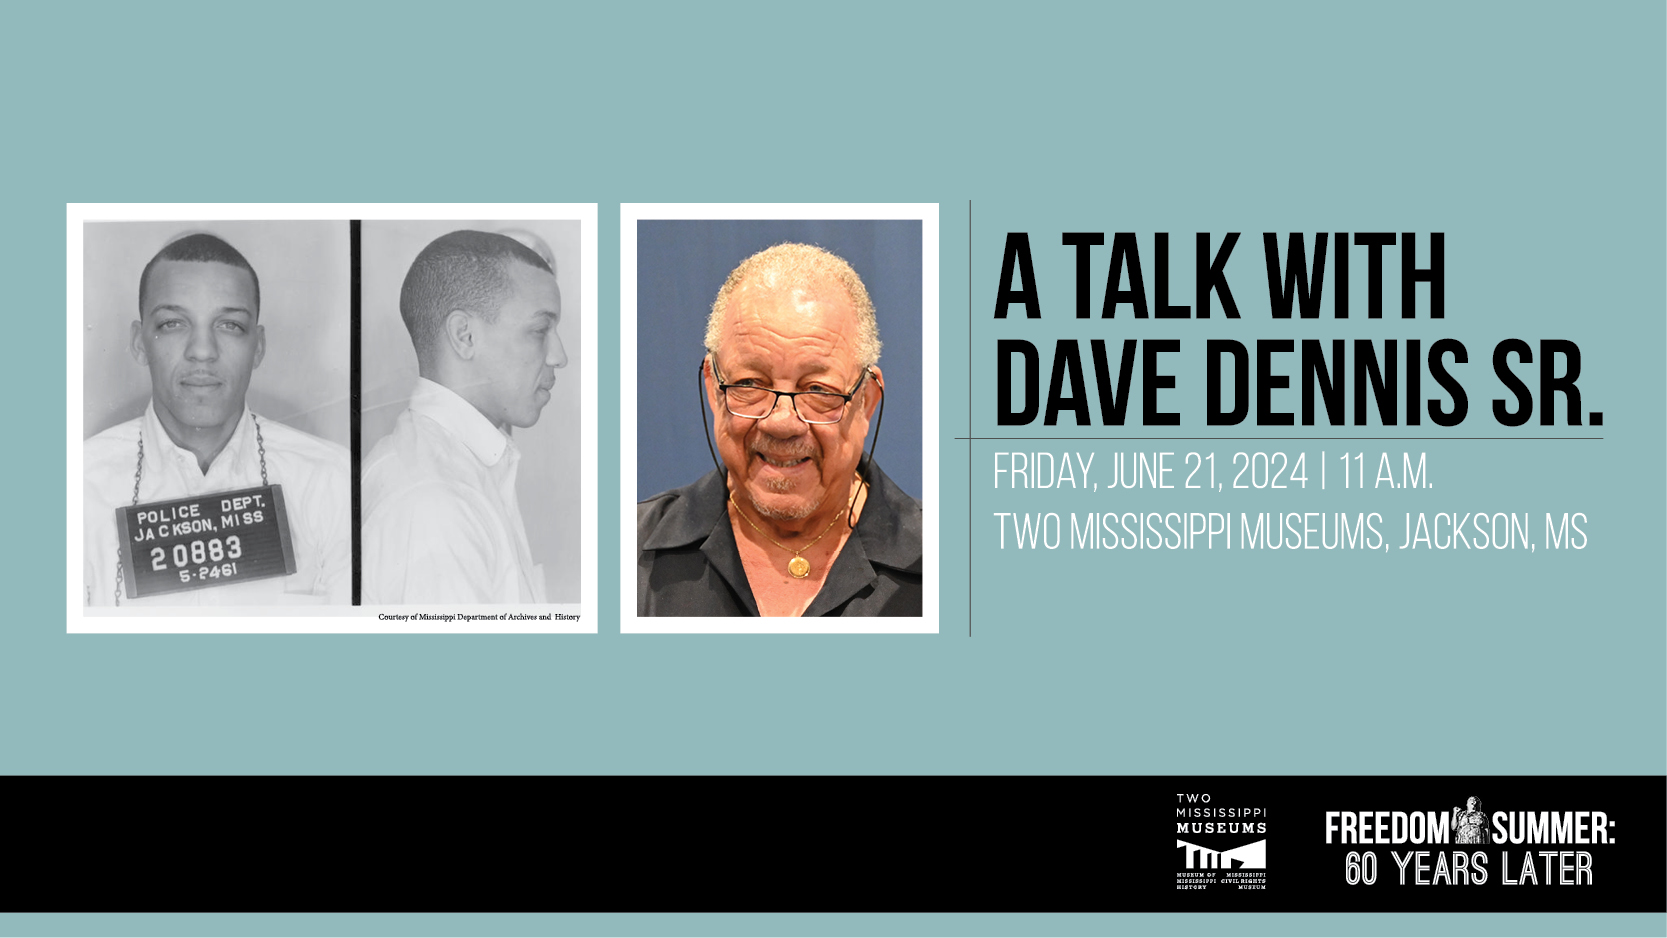 A Talk with Dave Dennis Sr.